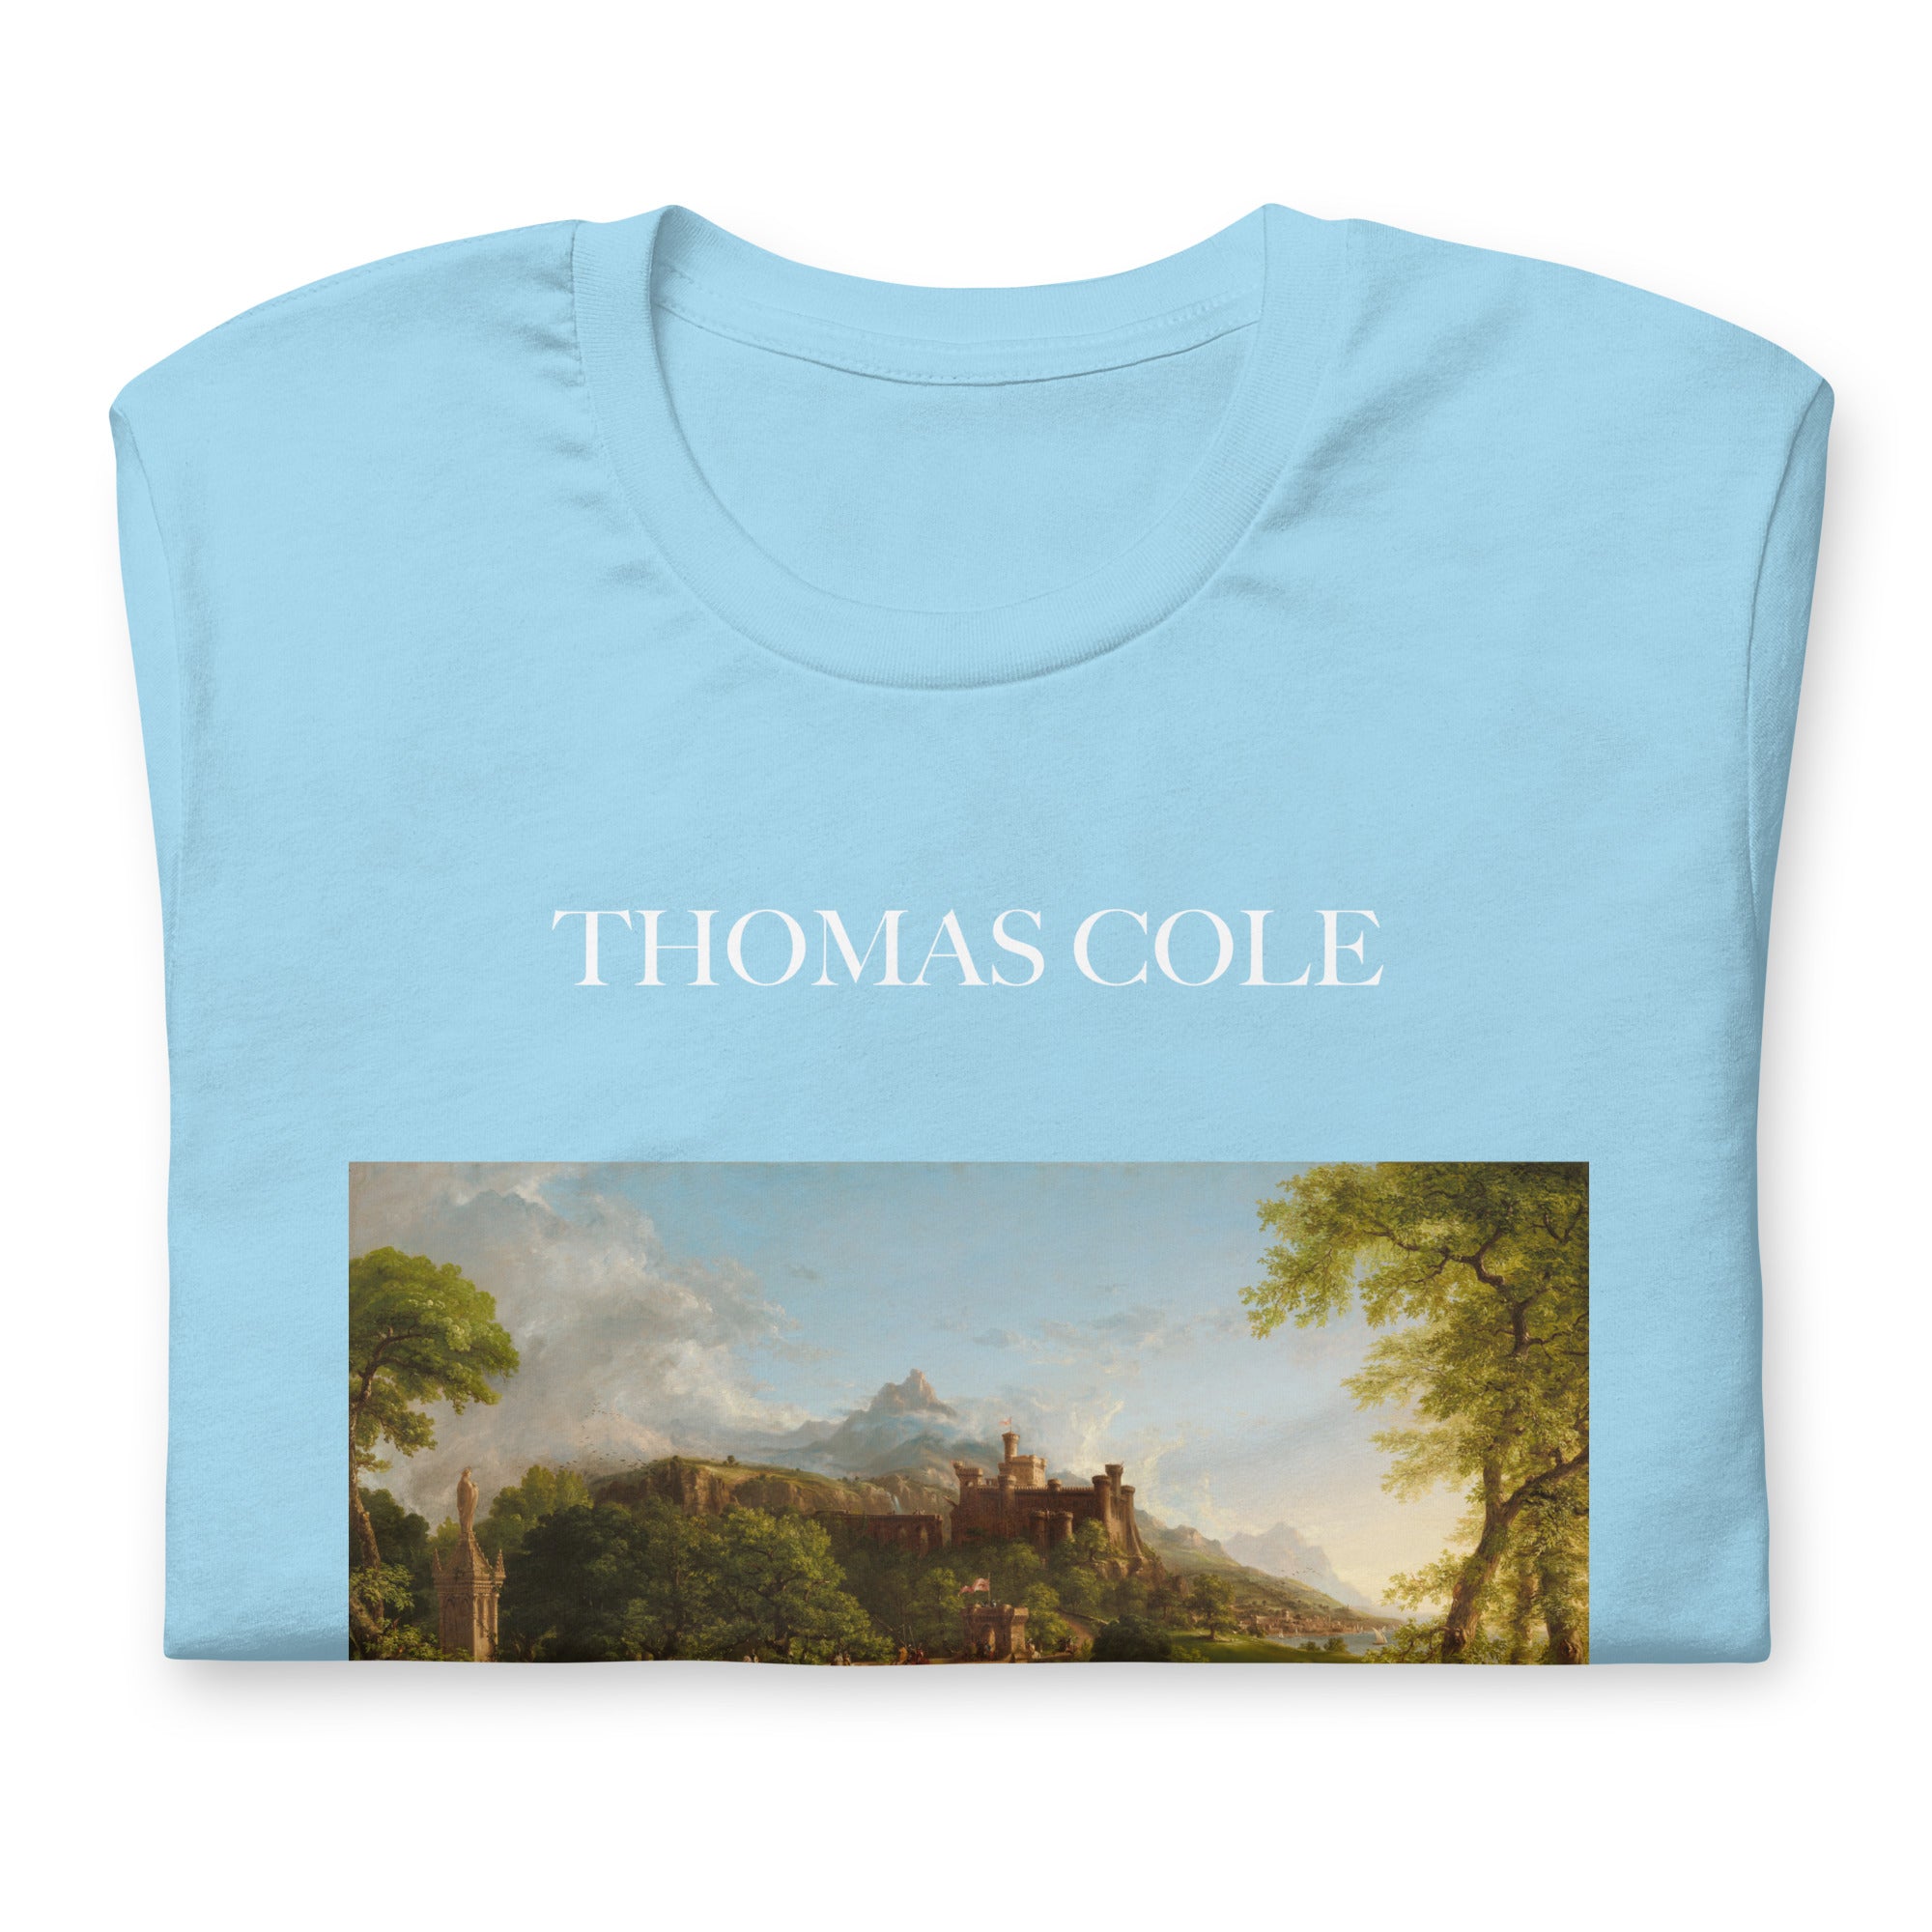 Thomas Cole 'The Departure' Famous Painting T-Shirt | Unisex Classic Art Tee